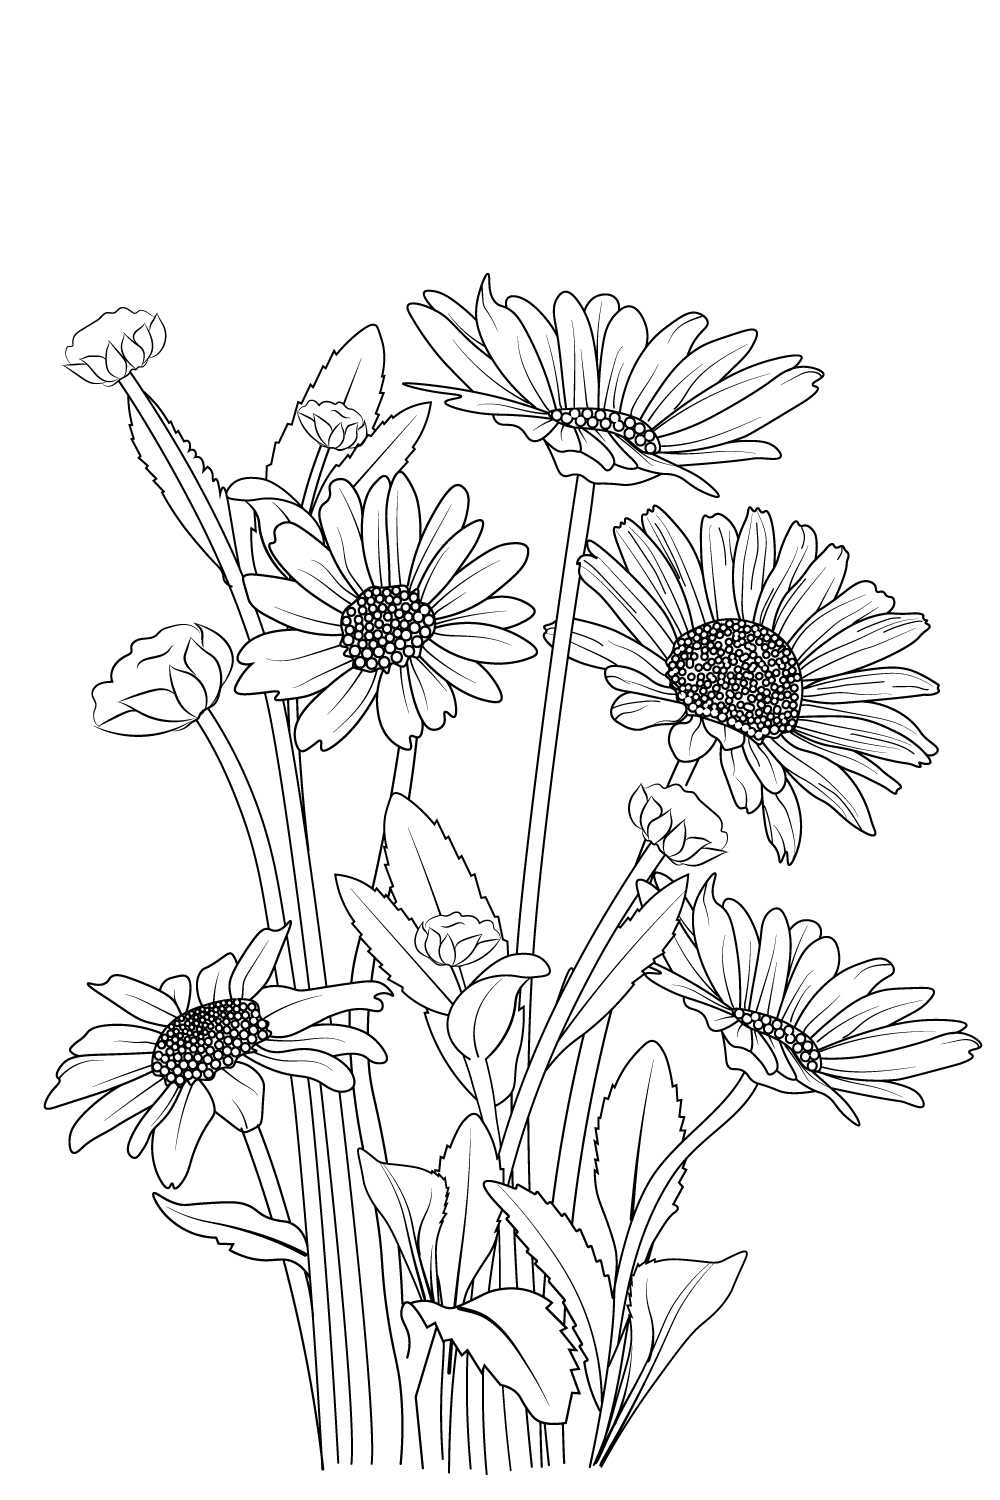 Outline Daisy flower drawing and botanical daisy flower illustration. daisy  vecetor art. - MasterBundles